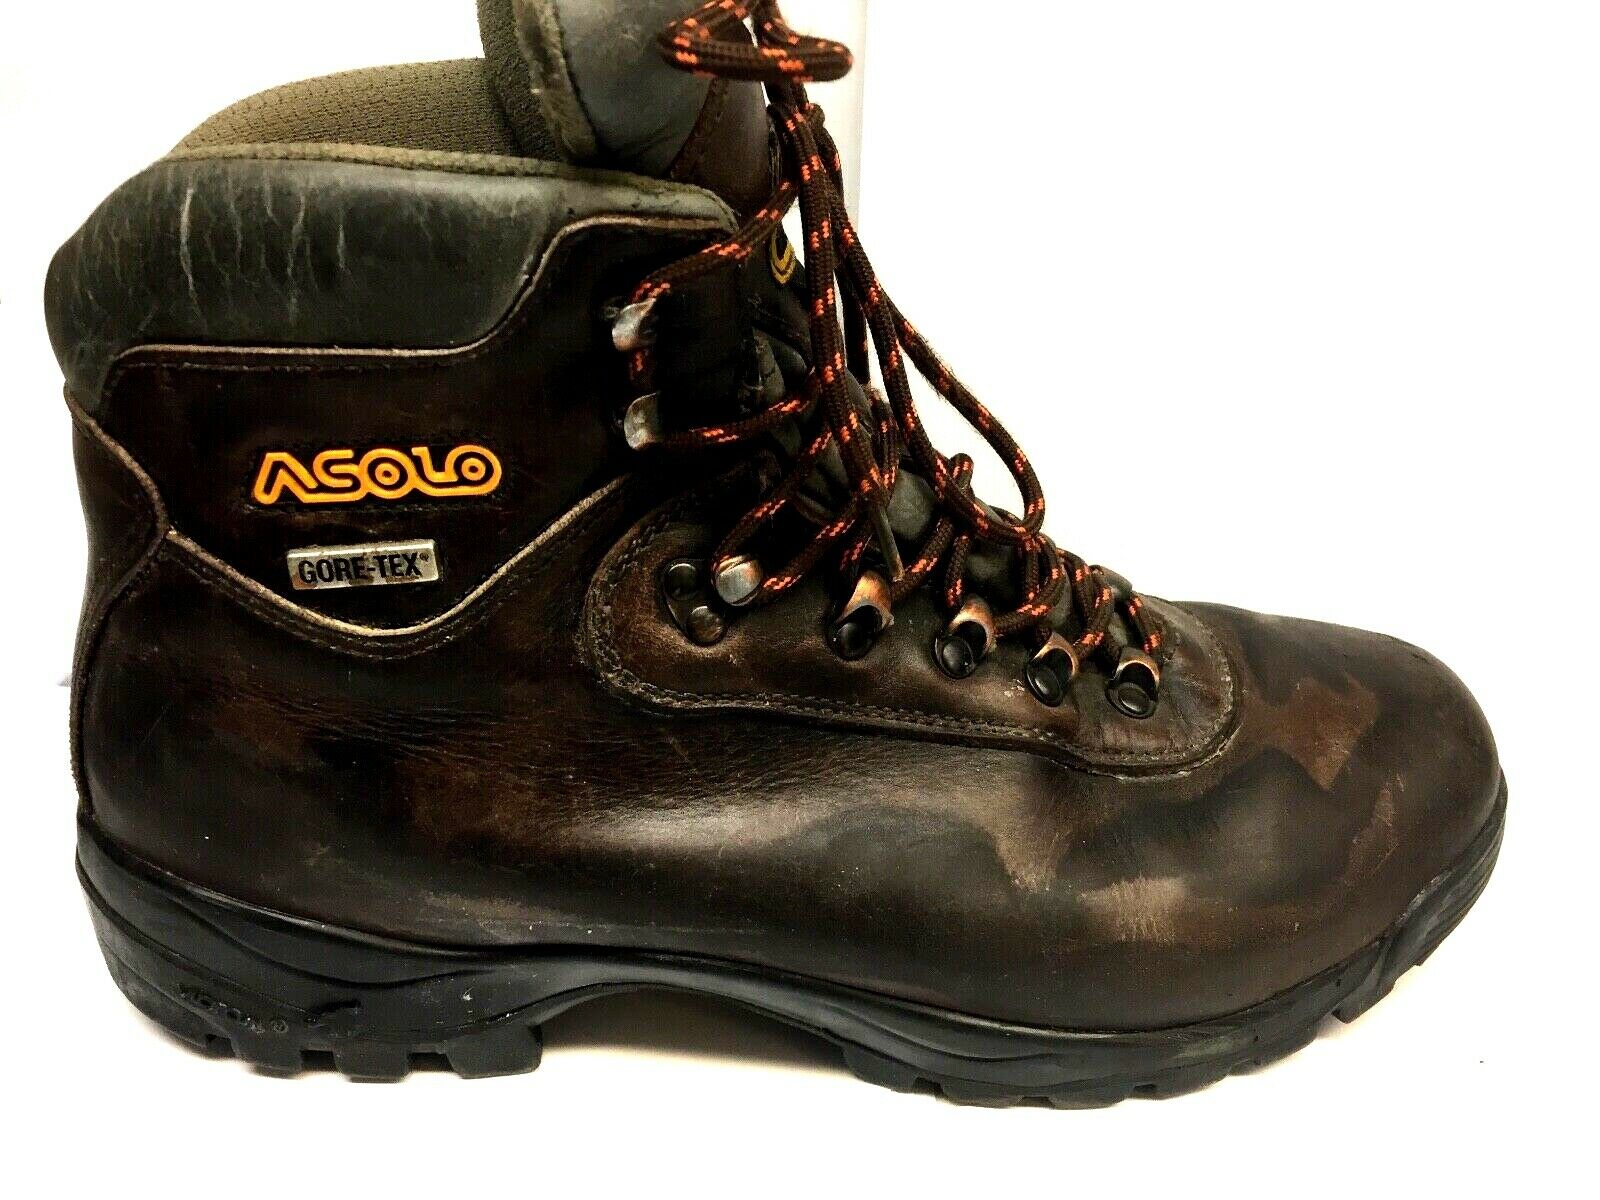 ASOLO AFX 520 GTX European Full Grain Leather Hiking Boots Gore-Tex Size 10